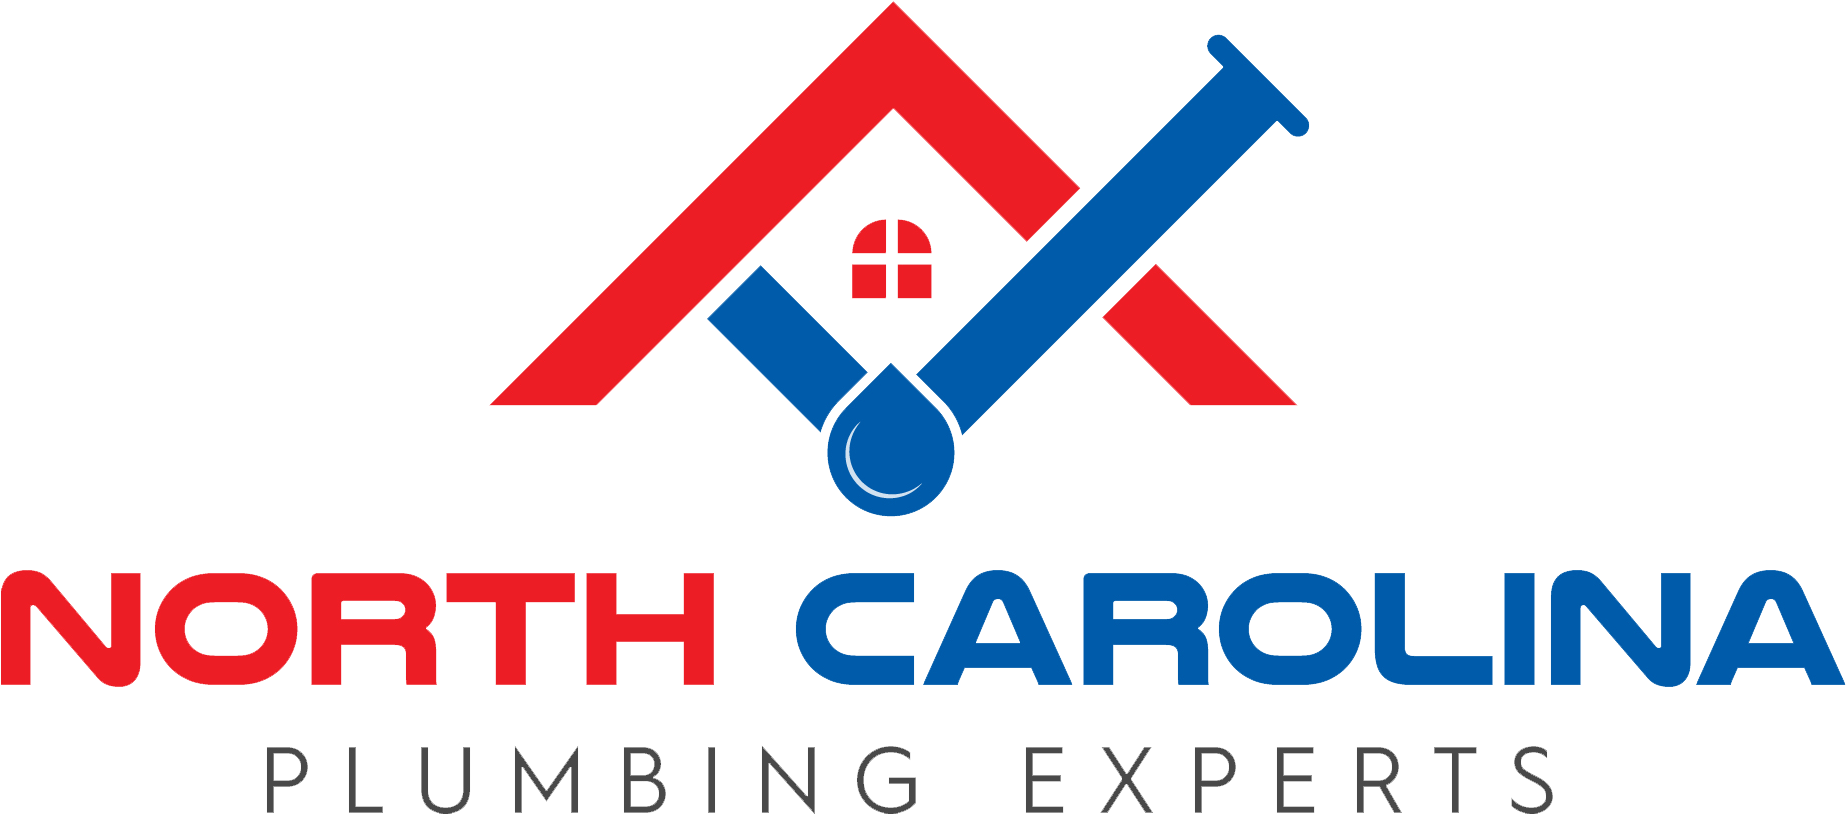 North Carolina Plumbing Experts Logo - Roof (1848x820)